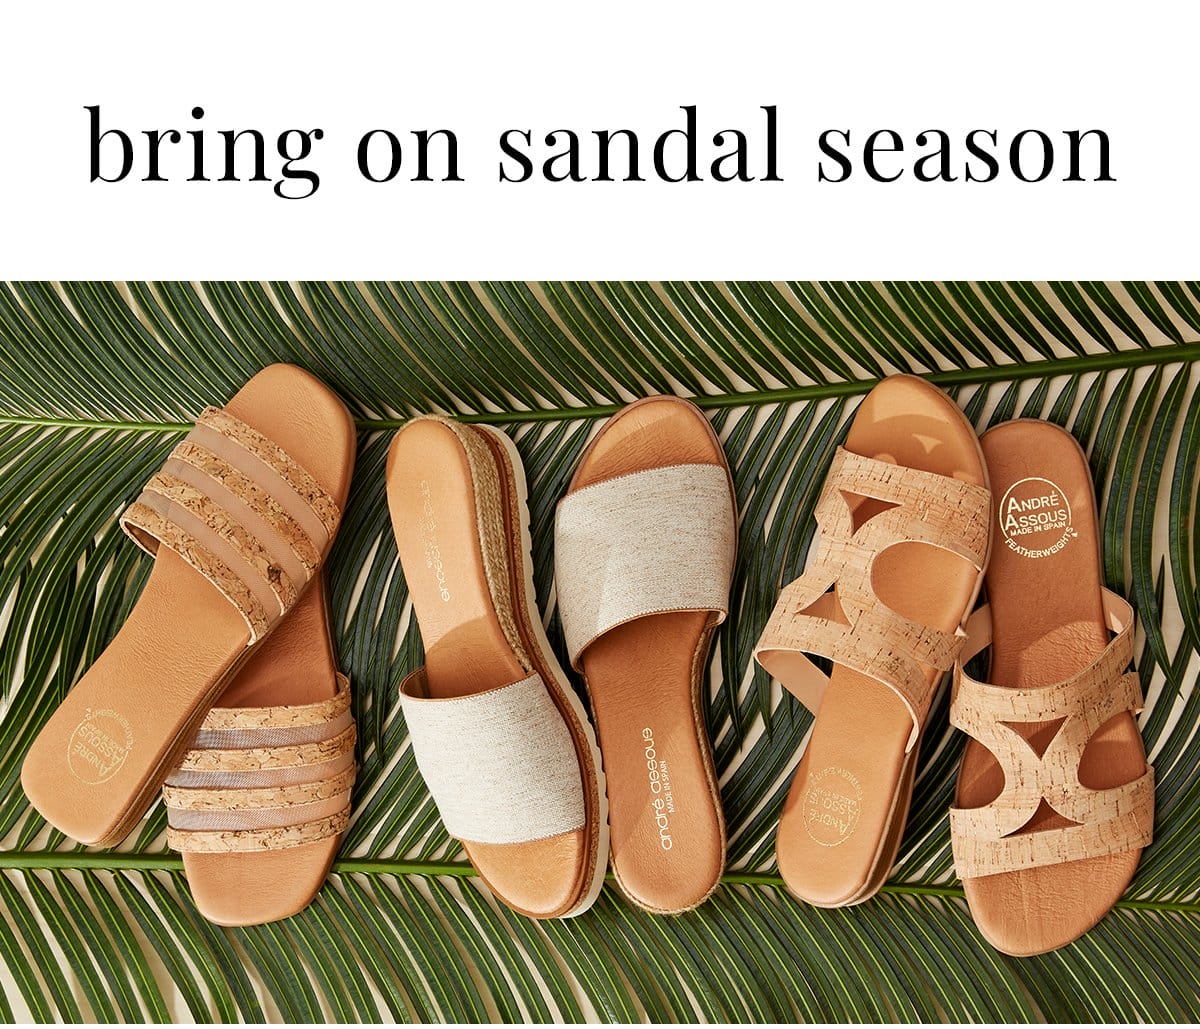 Bring on Sandal Season